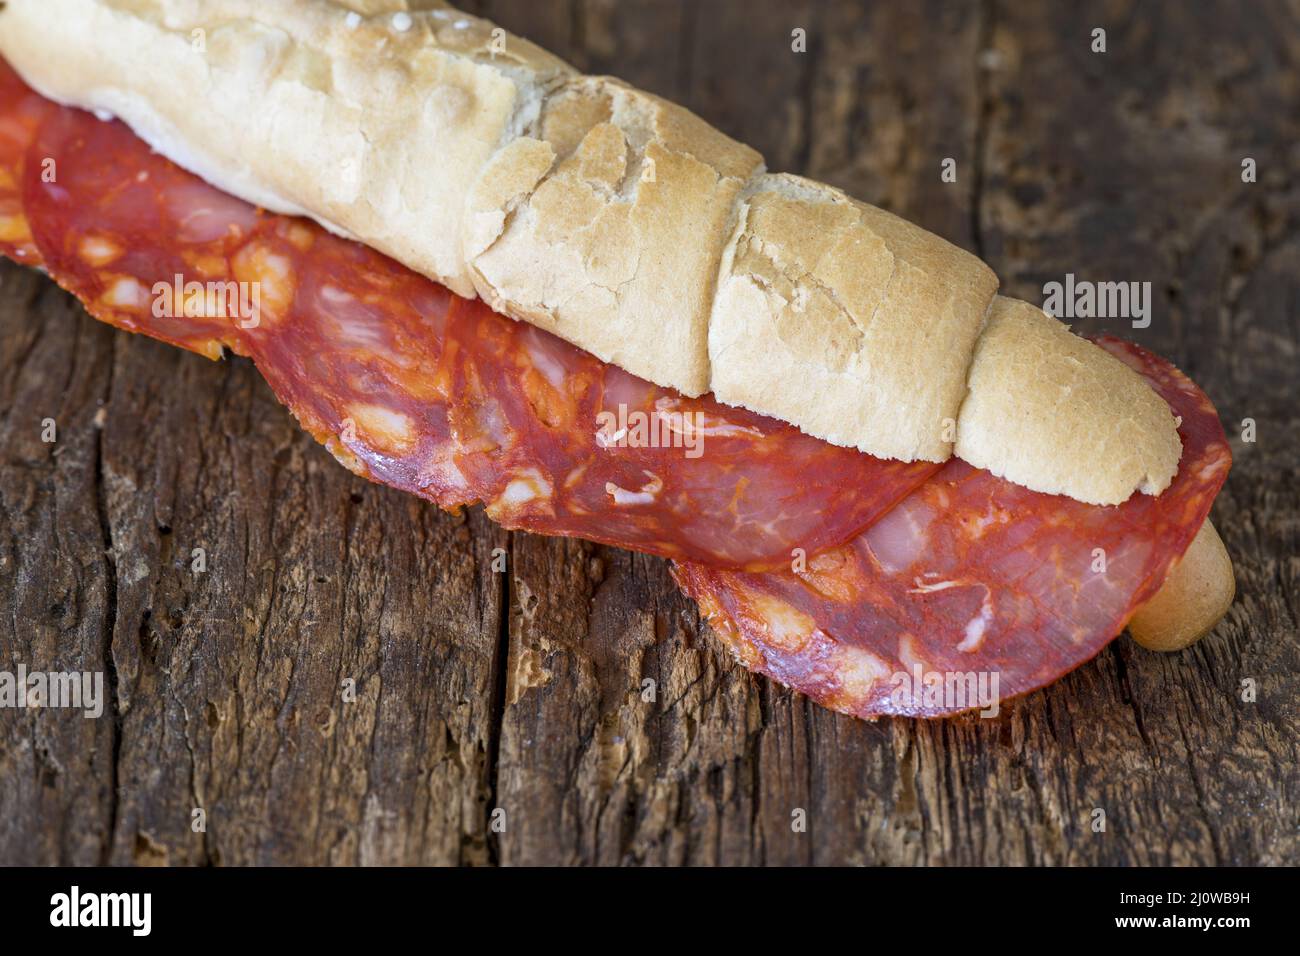 Spanish chorizo slices in bread Stock Photo